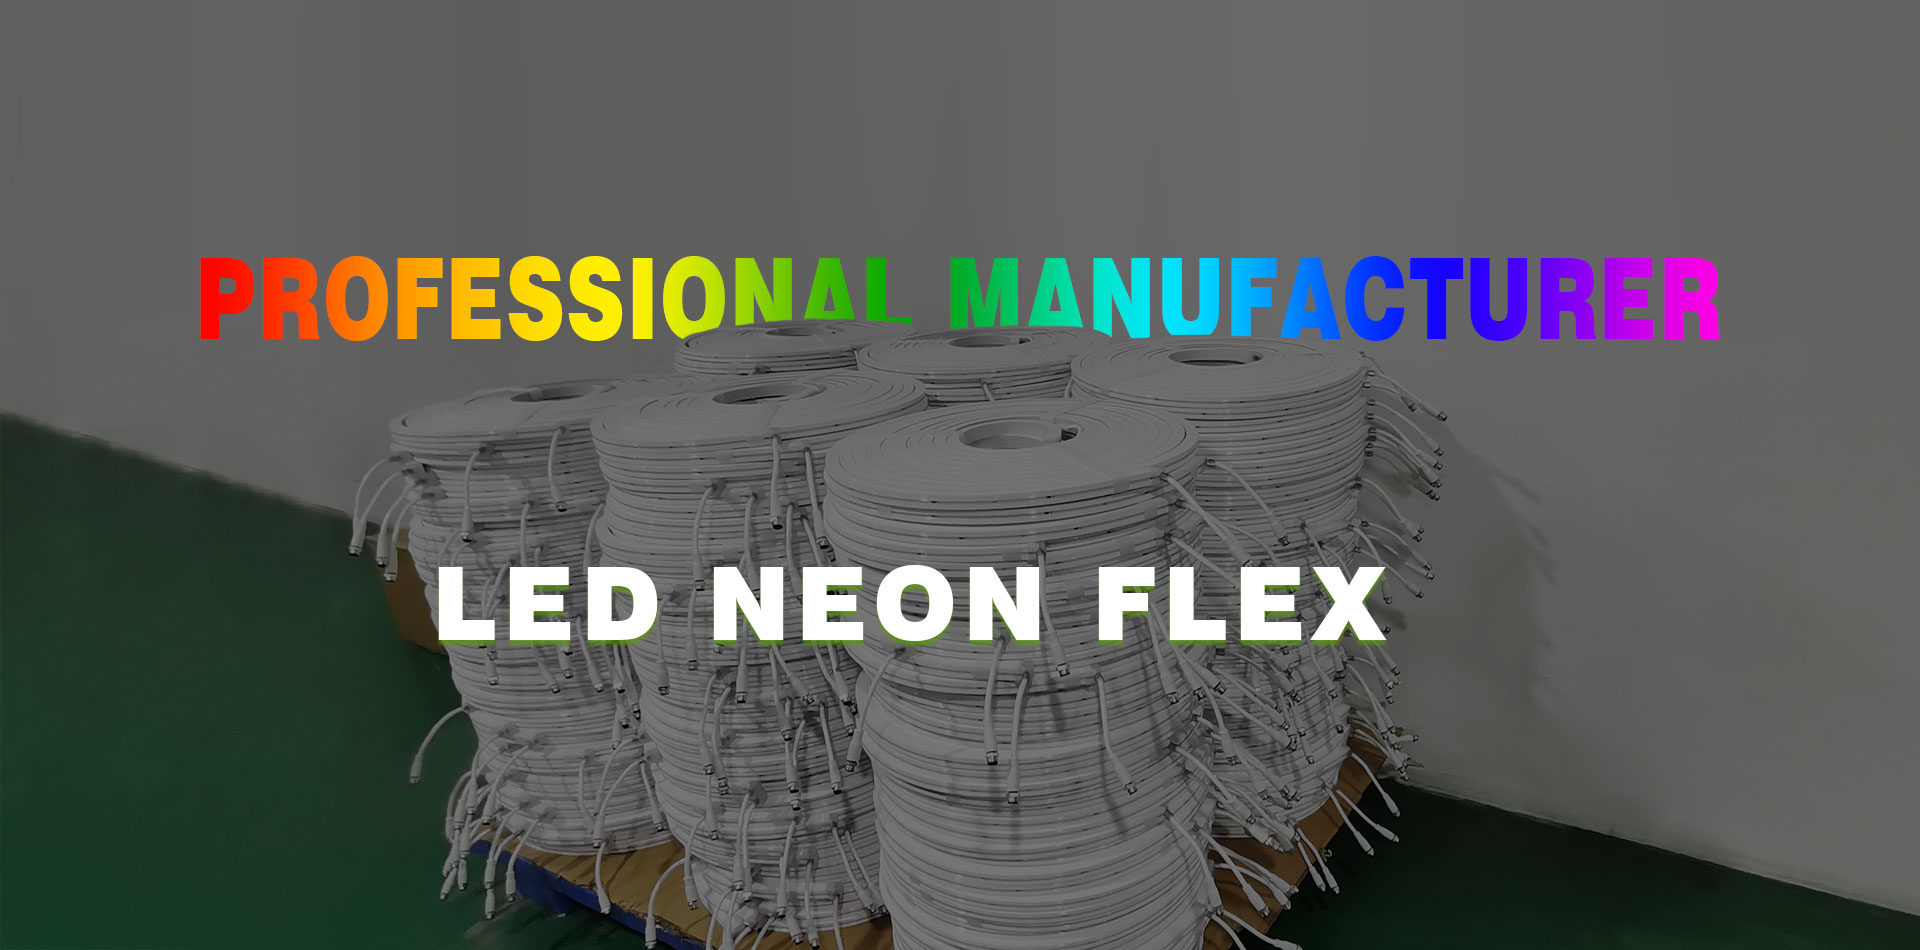 LED neon flexible manufacturer